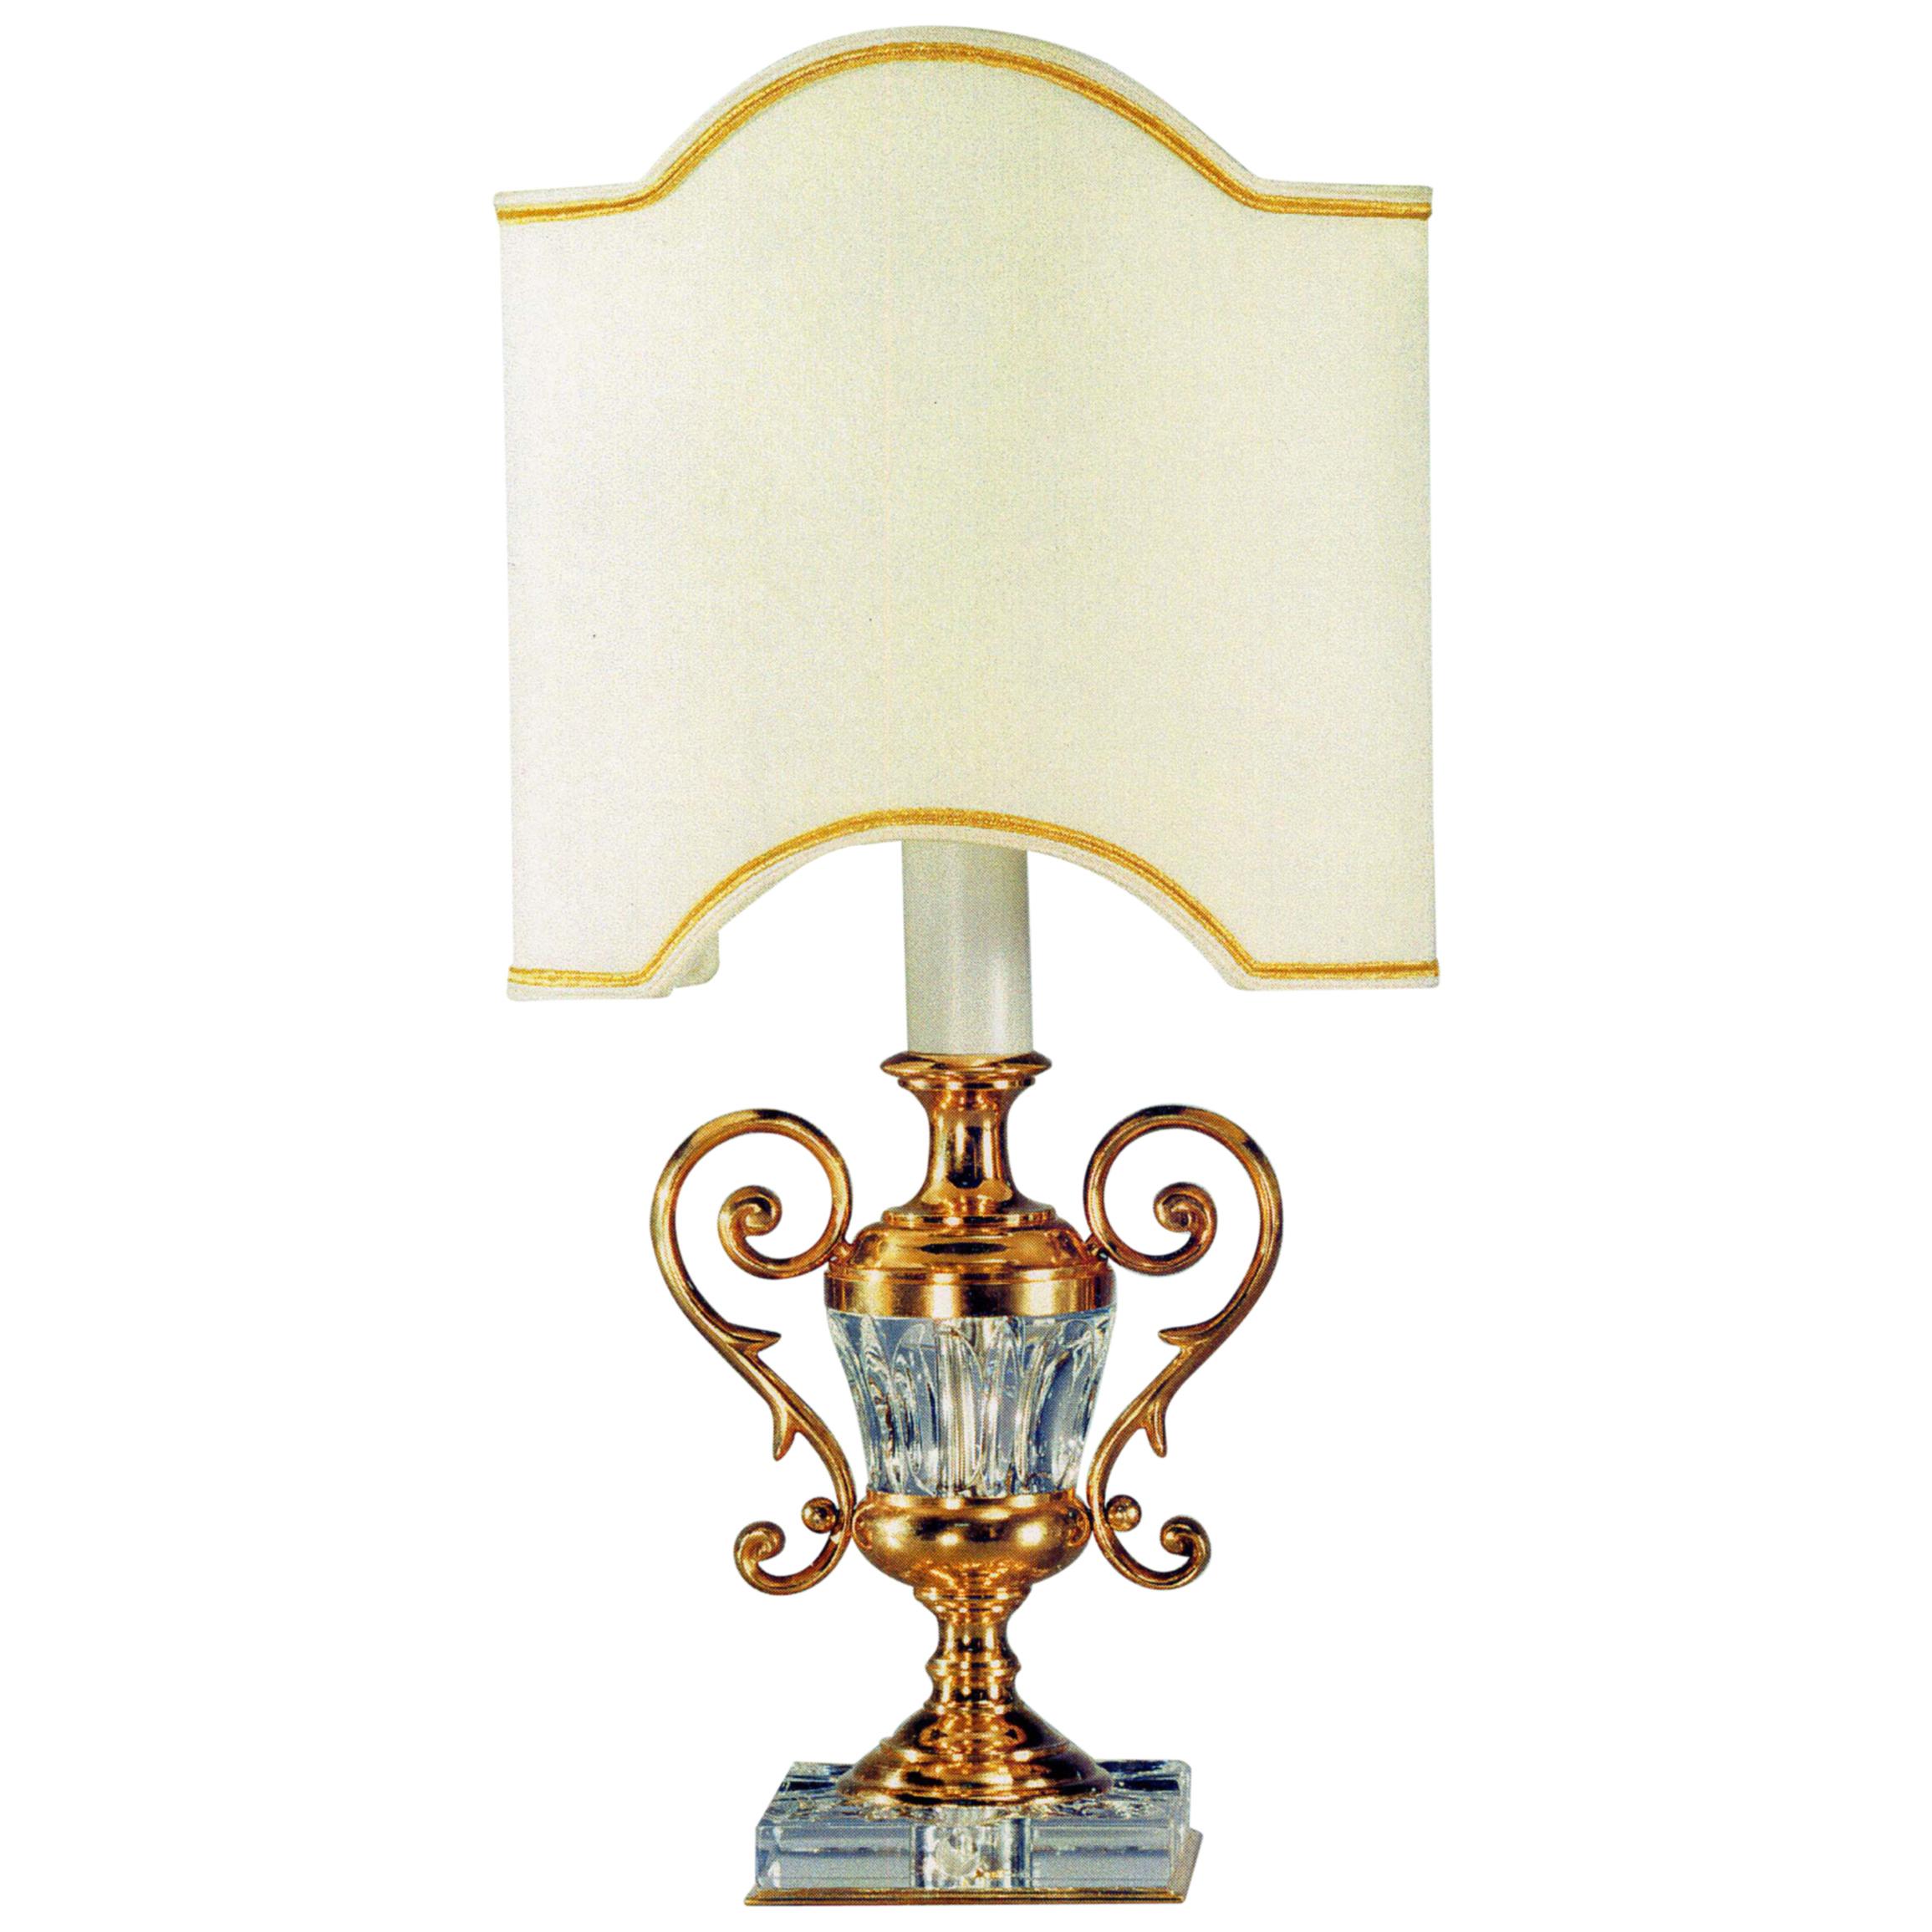 Lampe de style néoclassique en bronze doré et cristal taillé de Gherardo Degli Albizzi